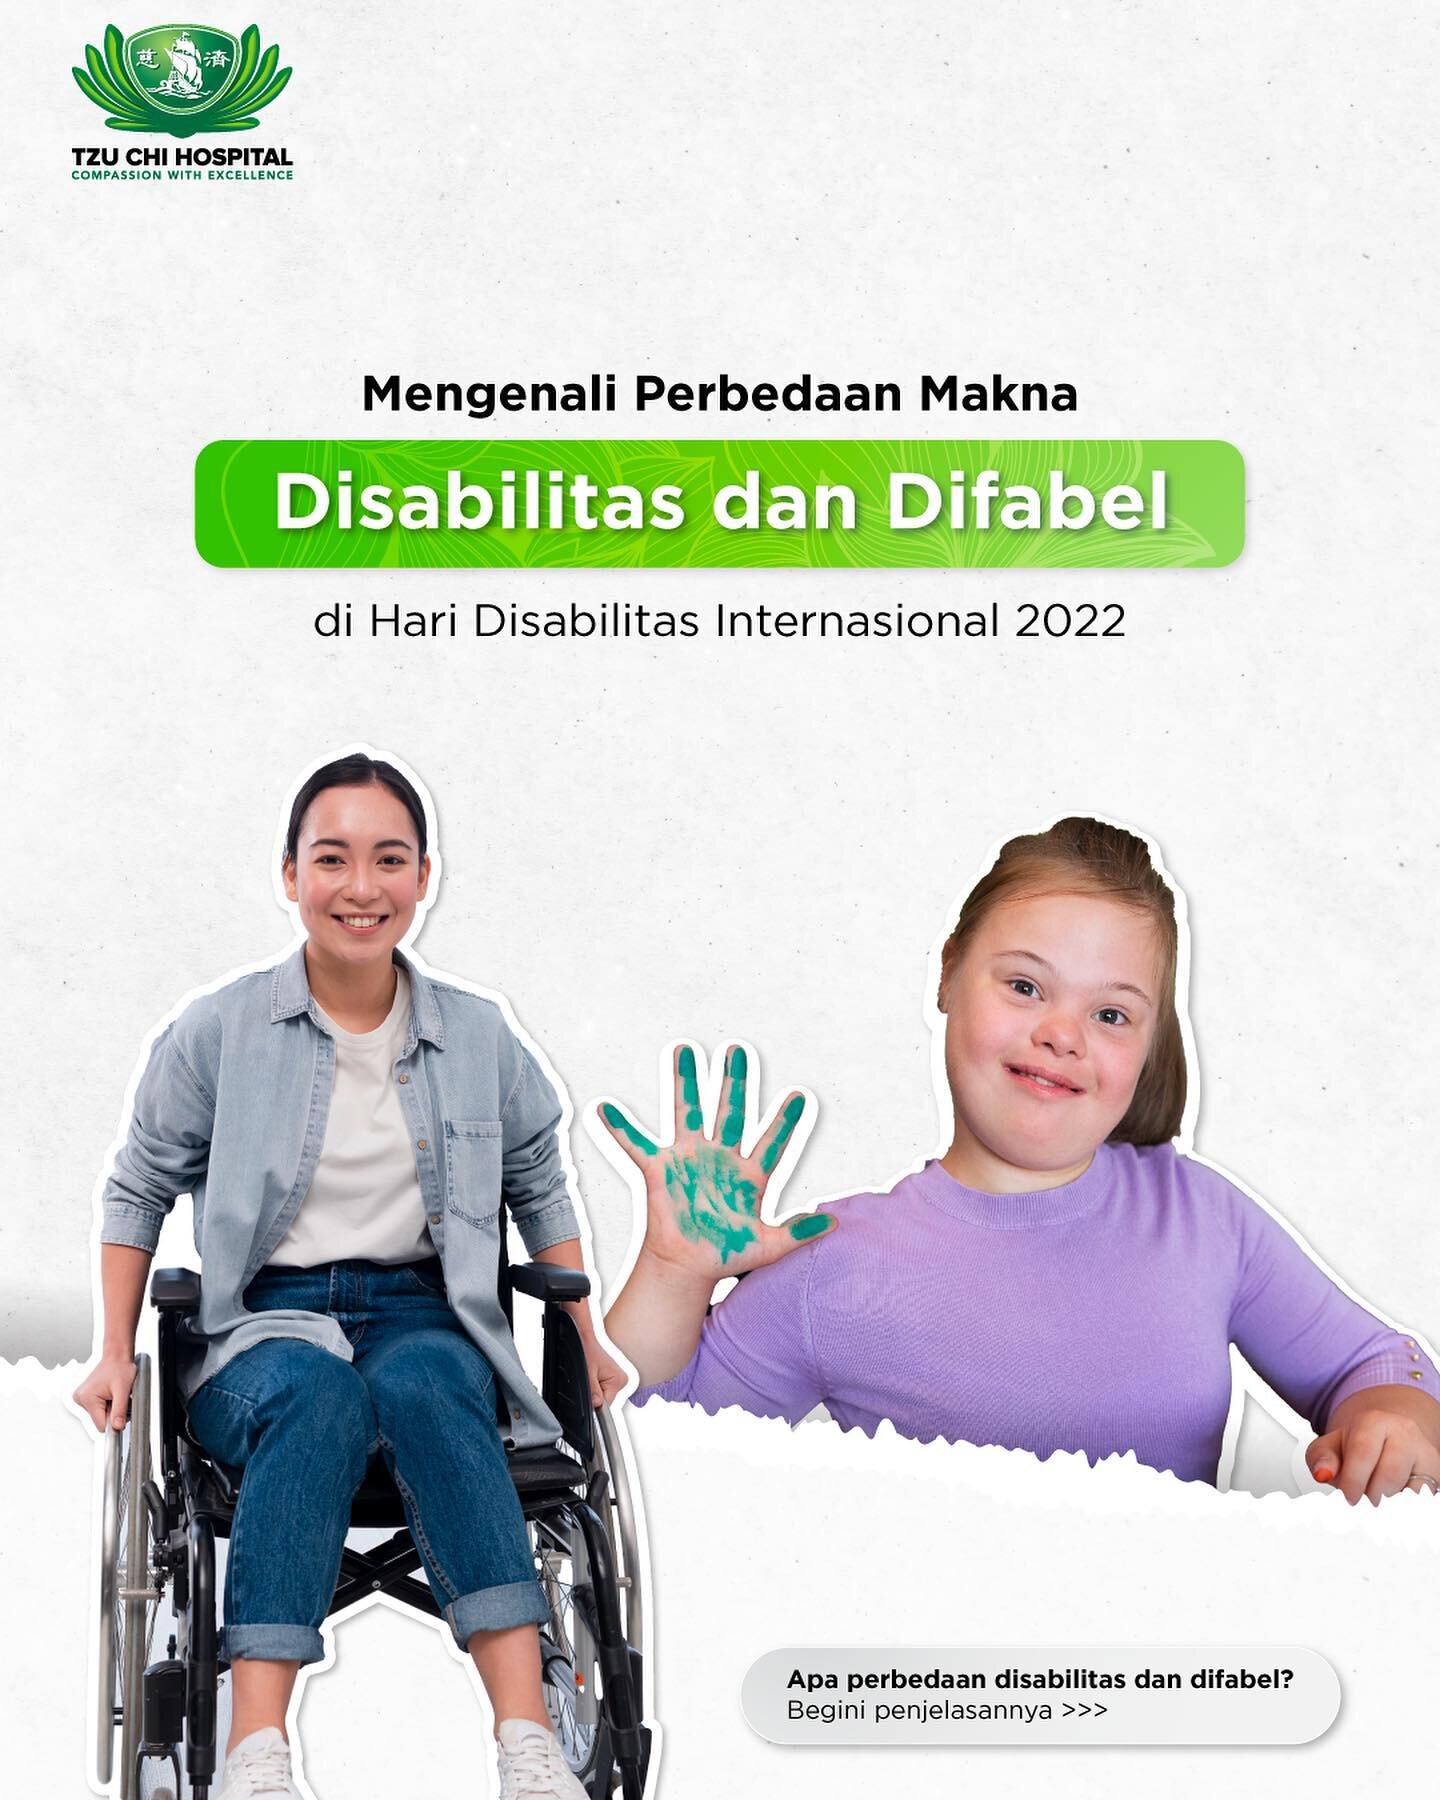 Selamat Hari Disabilitas Internasional. Mari Lawan Keterbatasan Tanpa Batas.

#tzuchihospital 
#haridisabilitasintetnasional